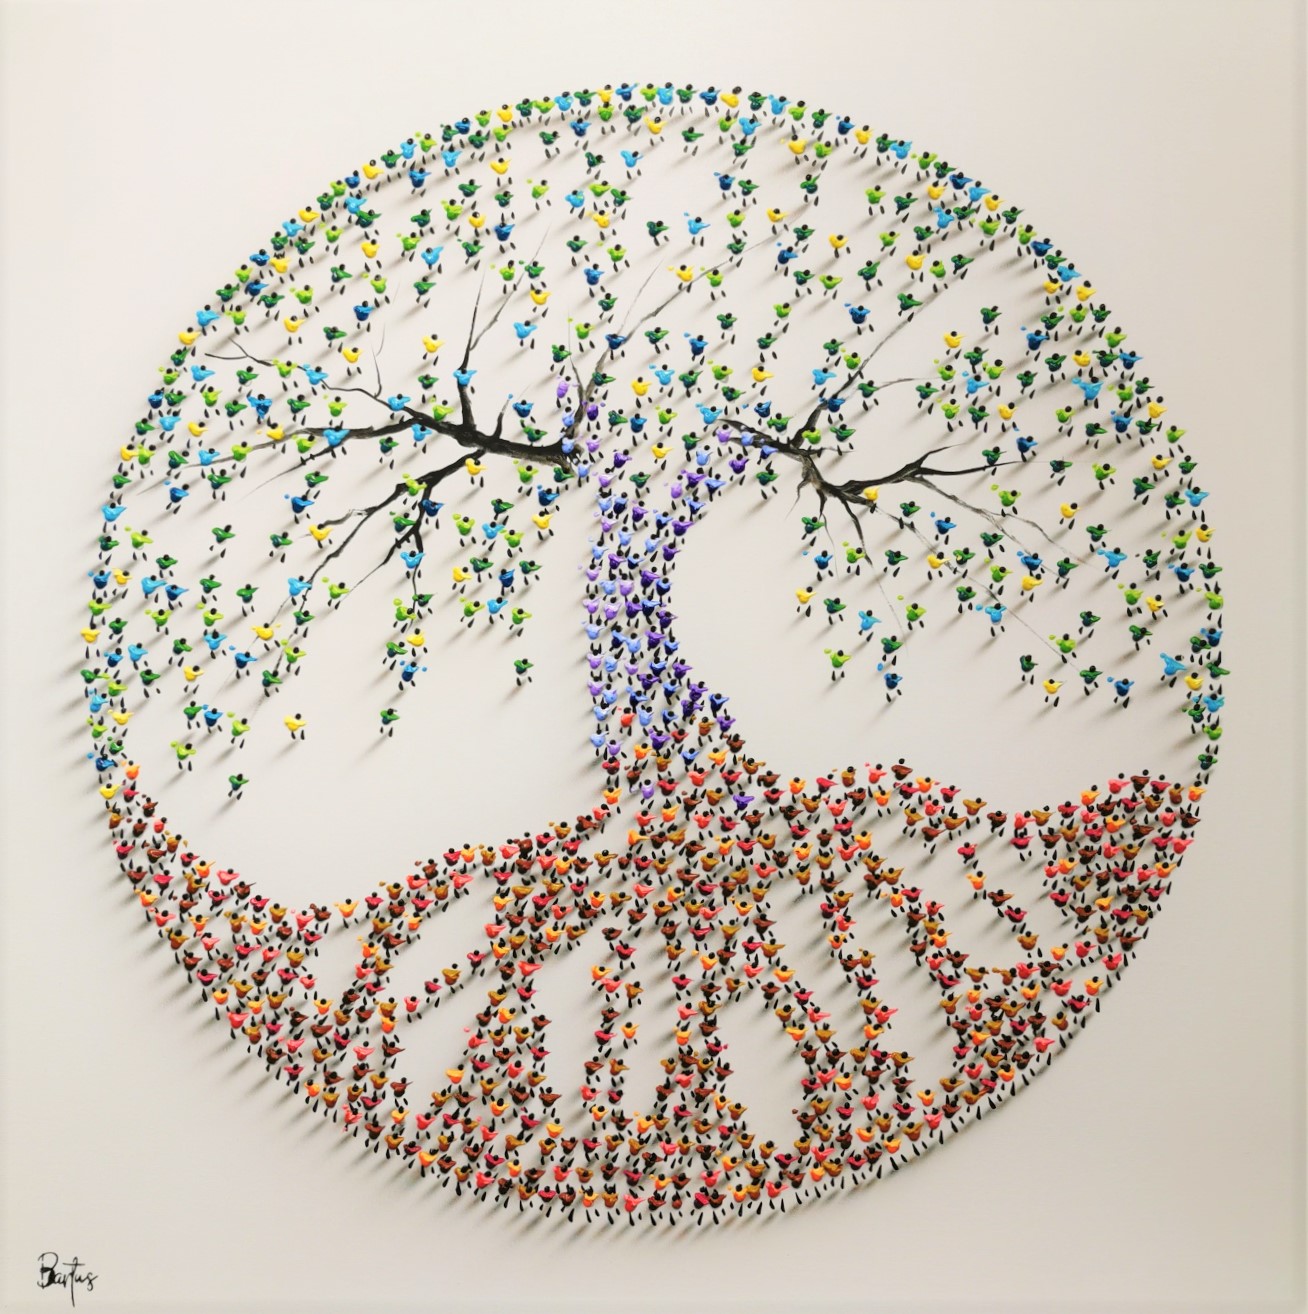 Francisco Bartus - Tree of Life VI